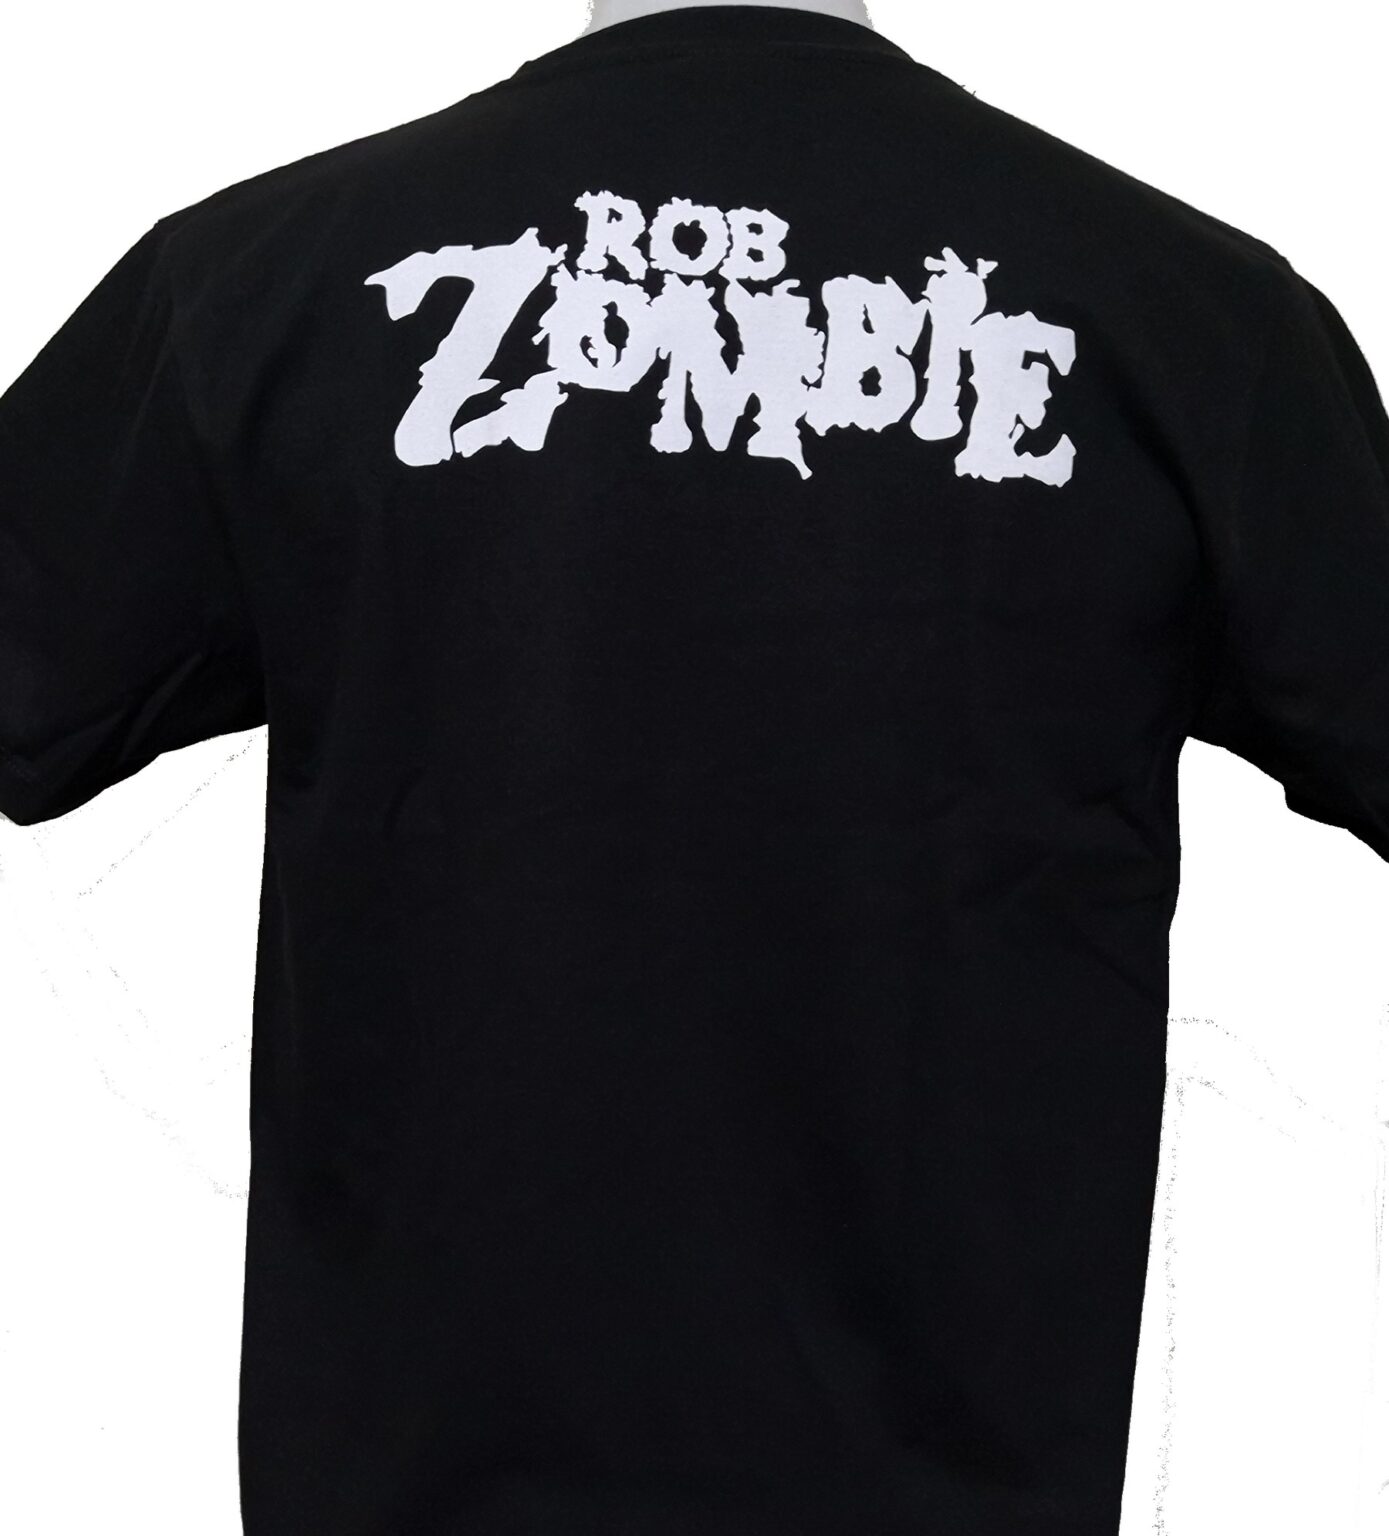 Rob Zombie tshirt size L RoxxBKK